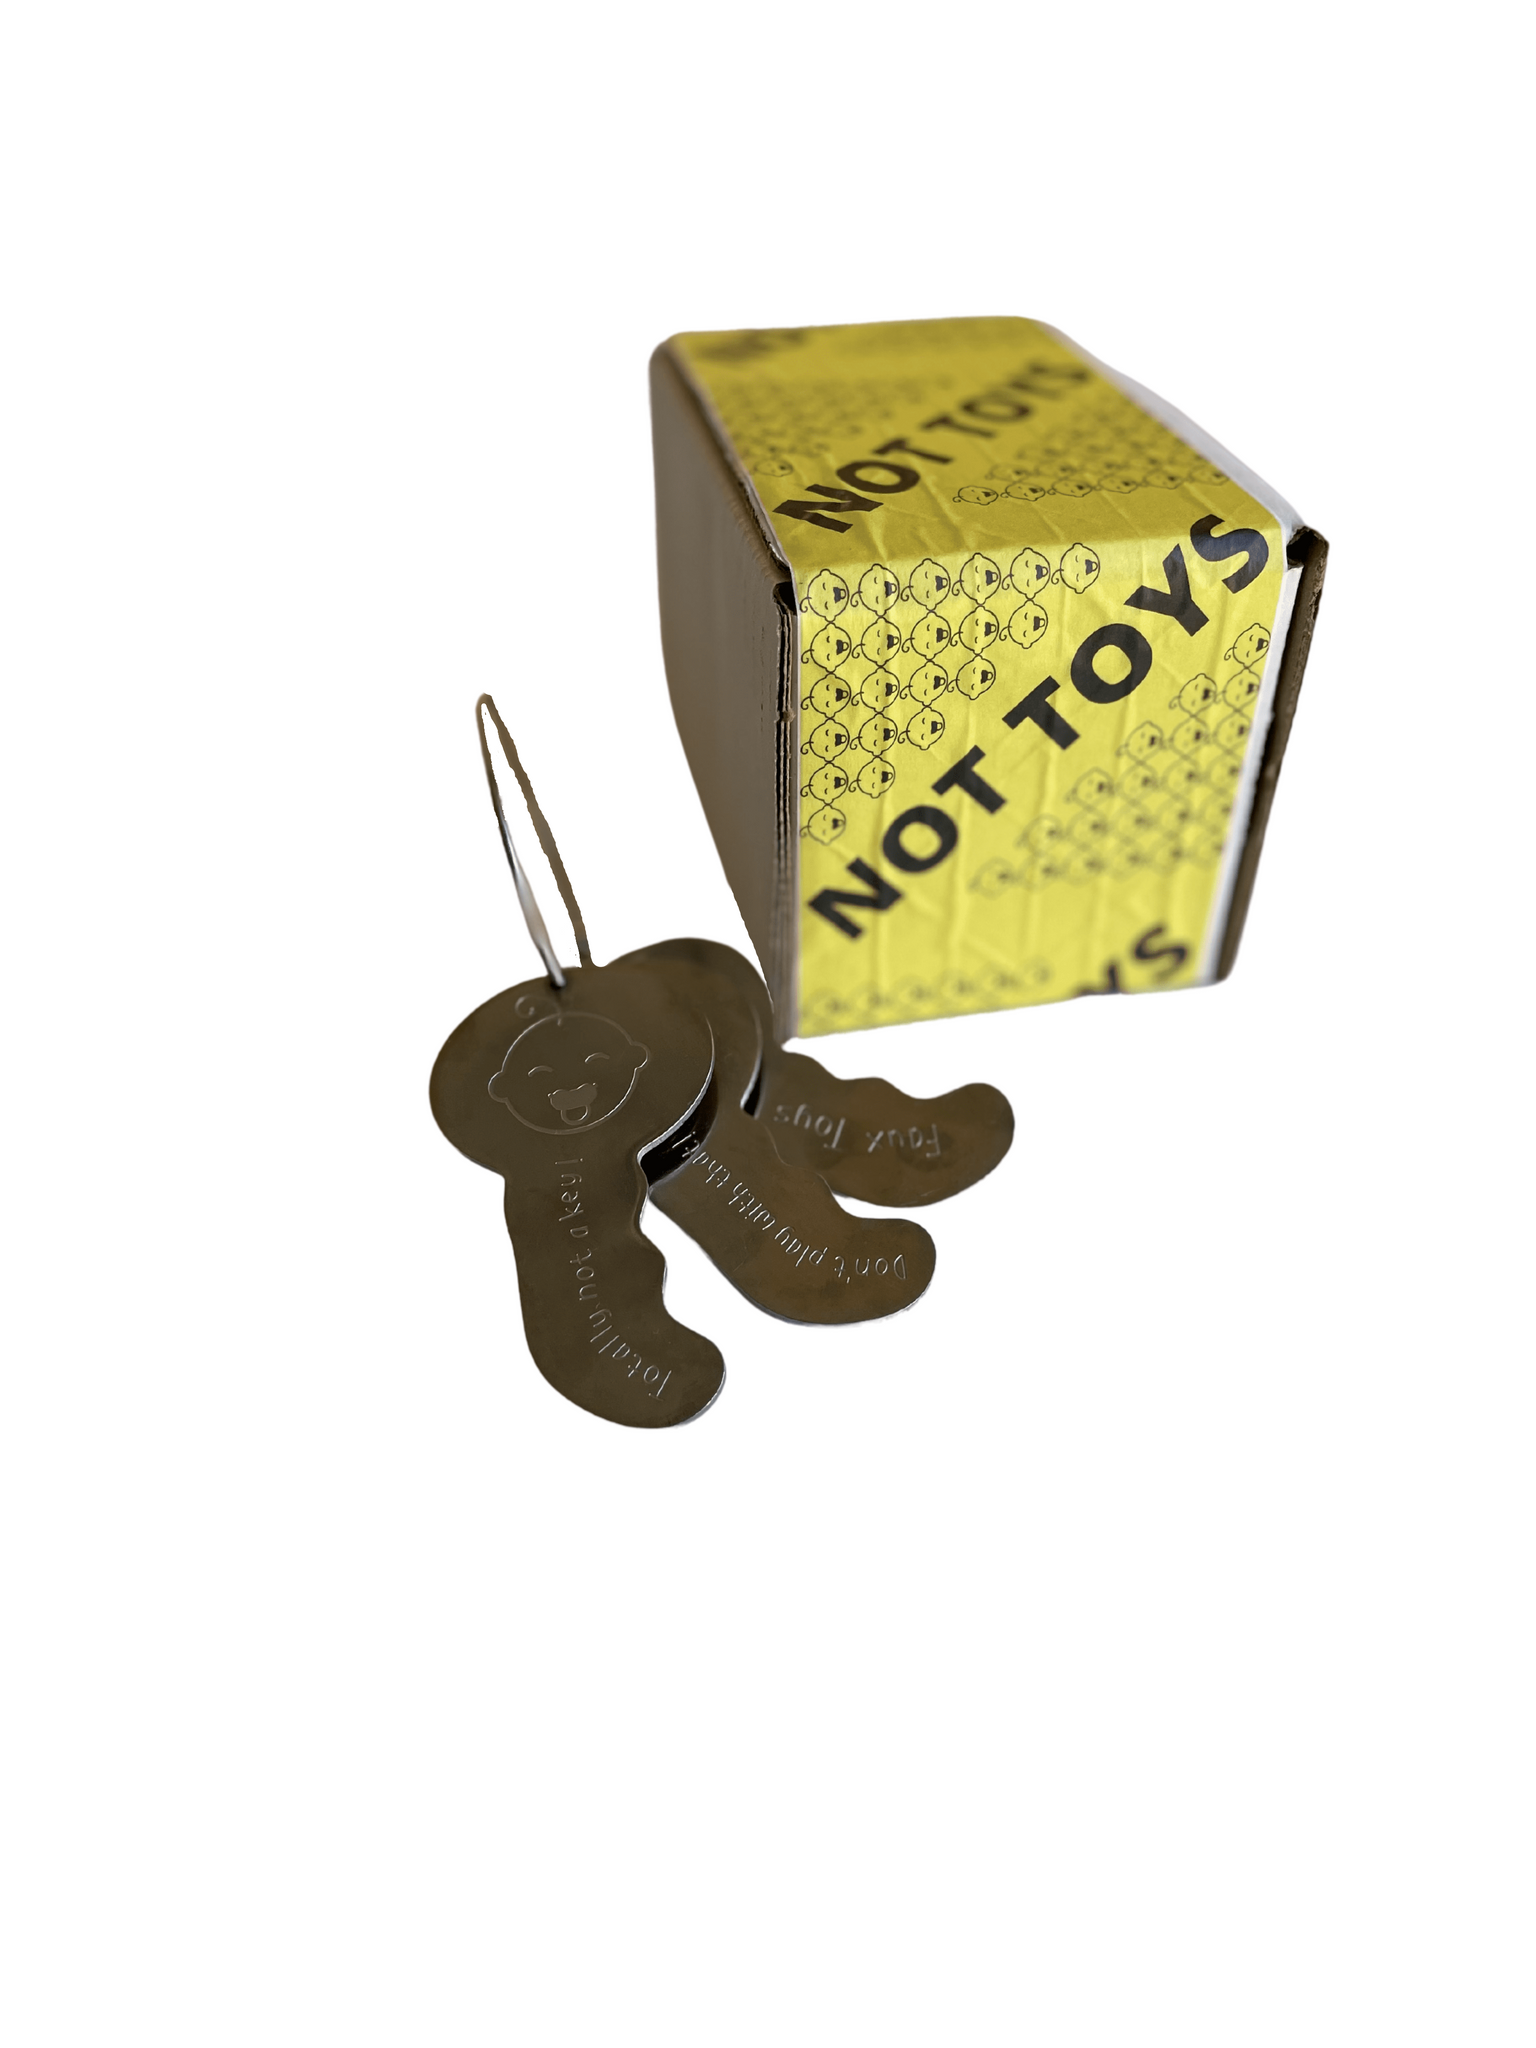 Metal Baby Keys Toy - Realistic Feel and Genuine Jingle